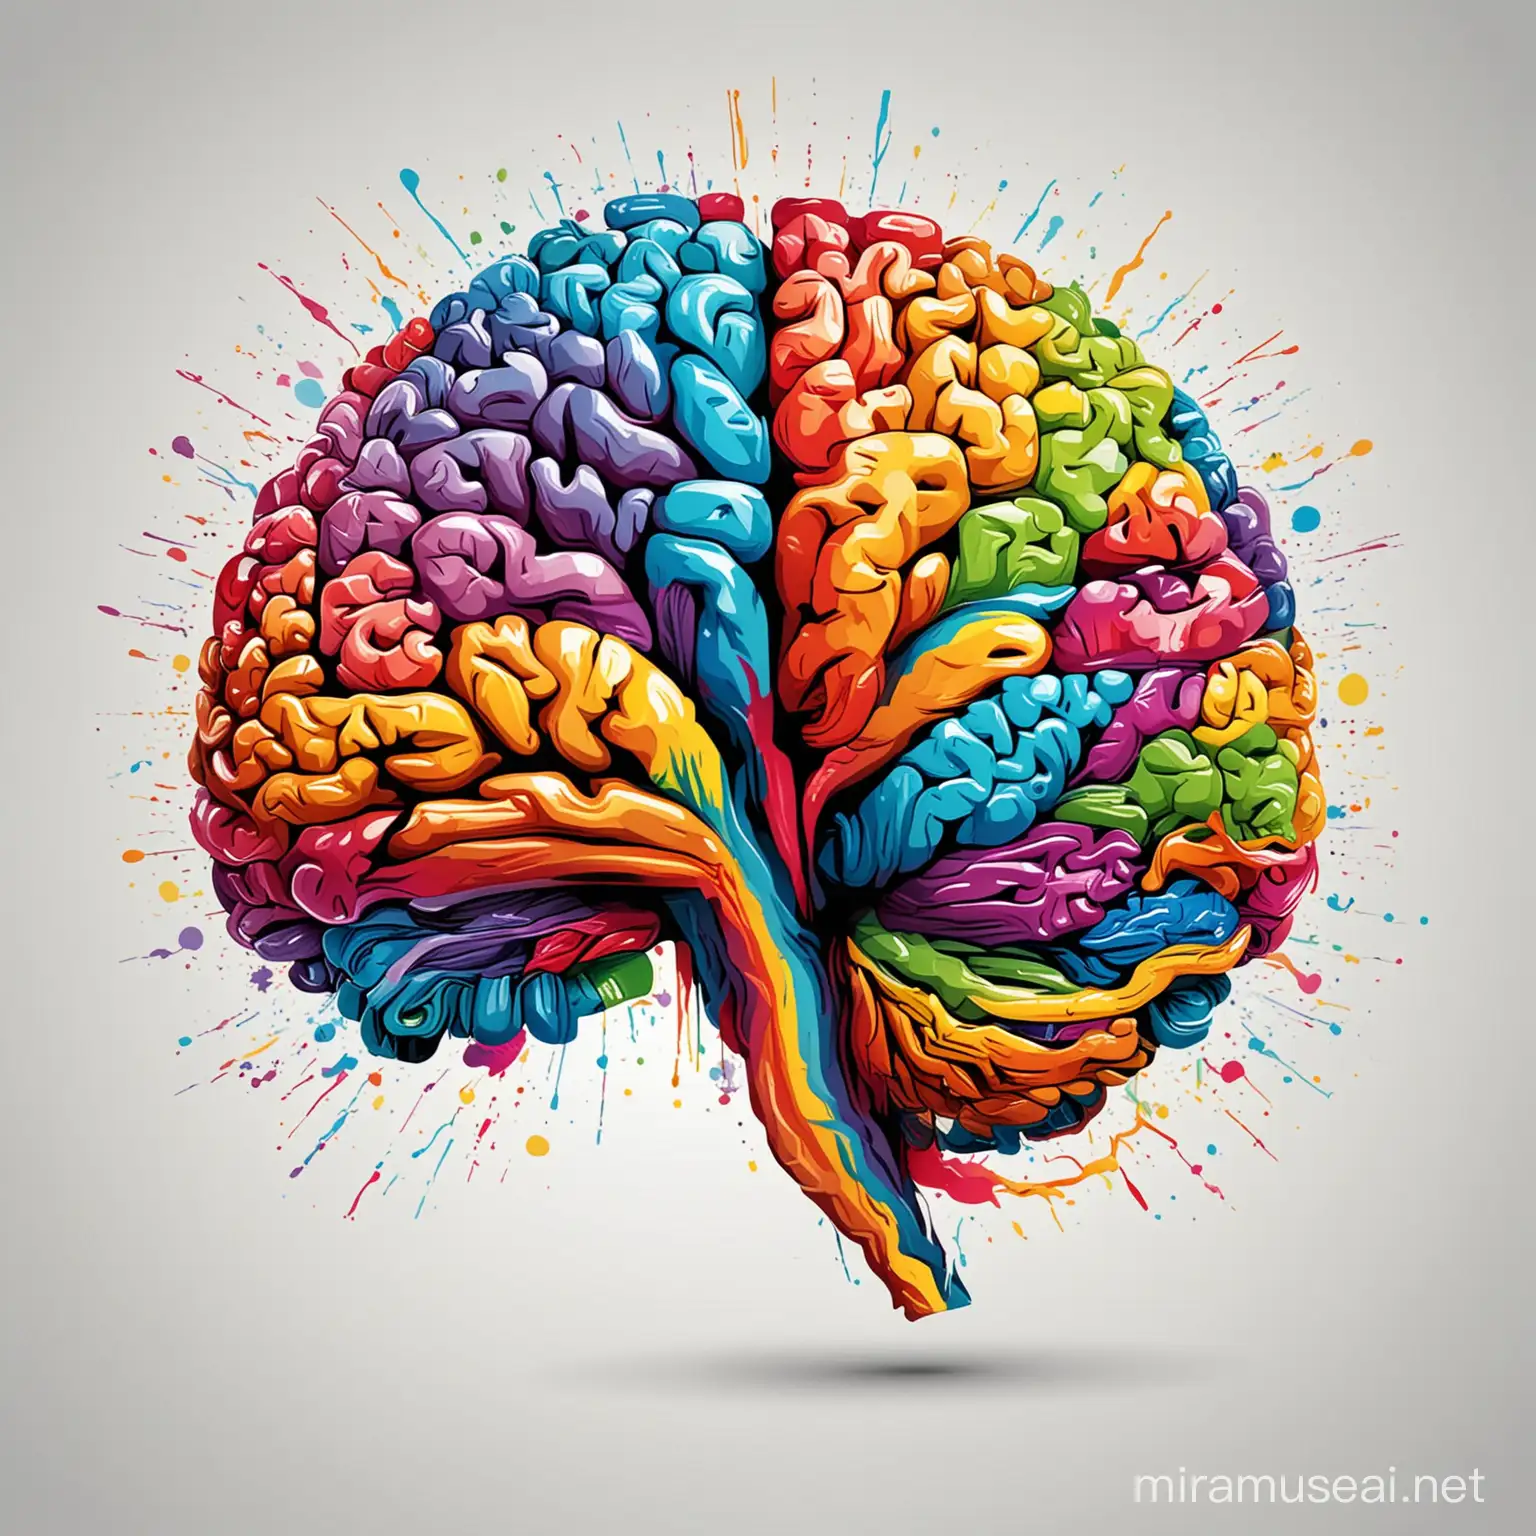 Vibrant Abstract Human Brain Art Pop Art Vector Illustration